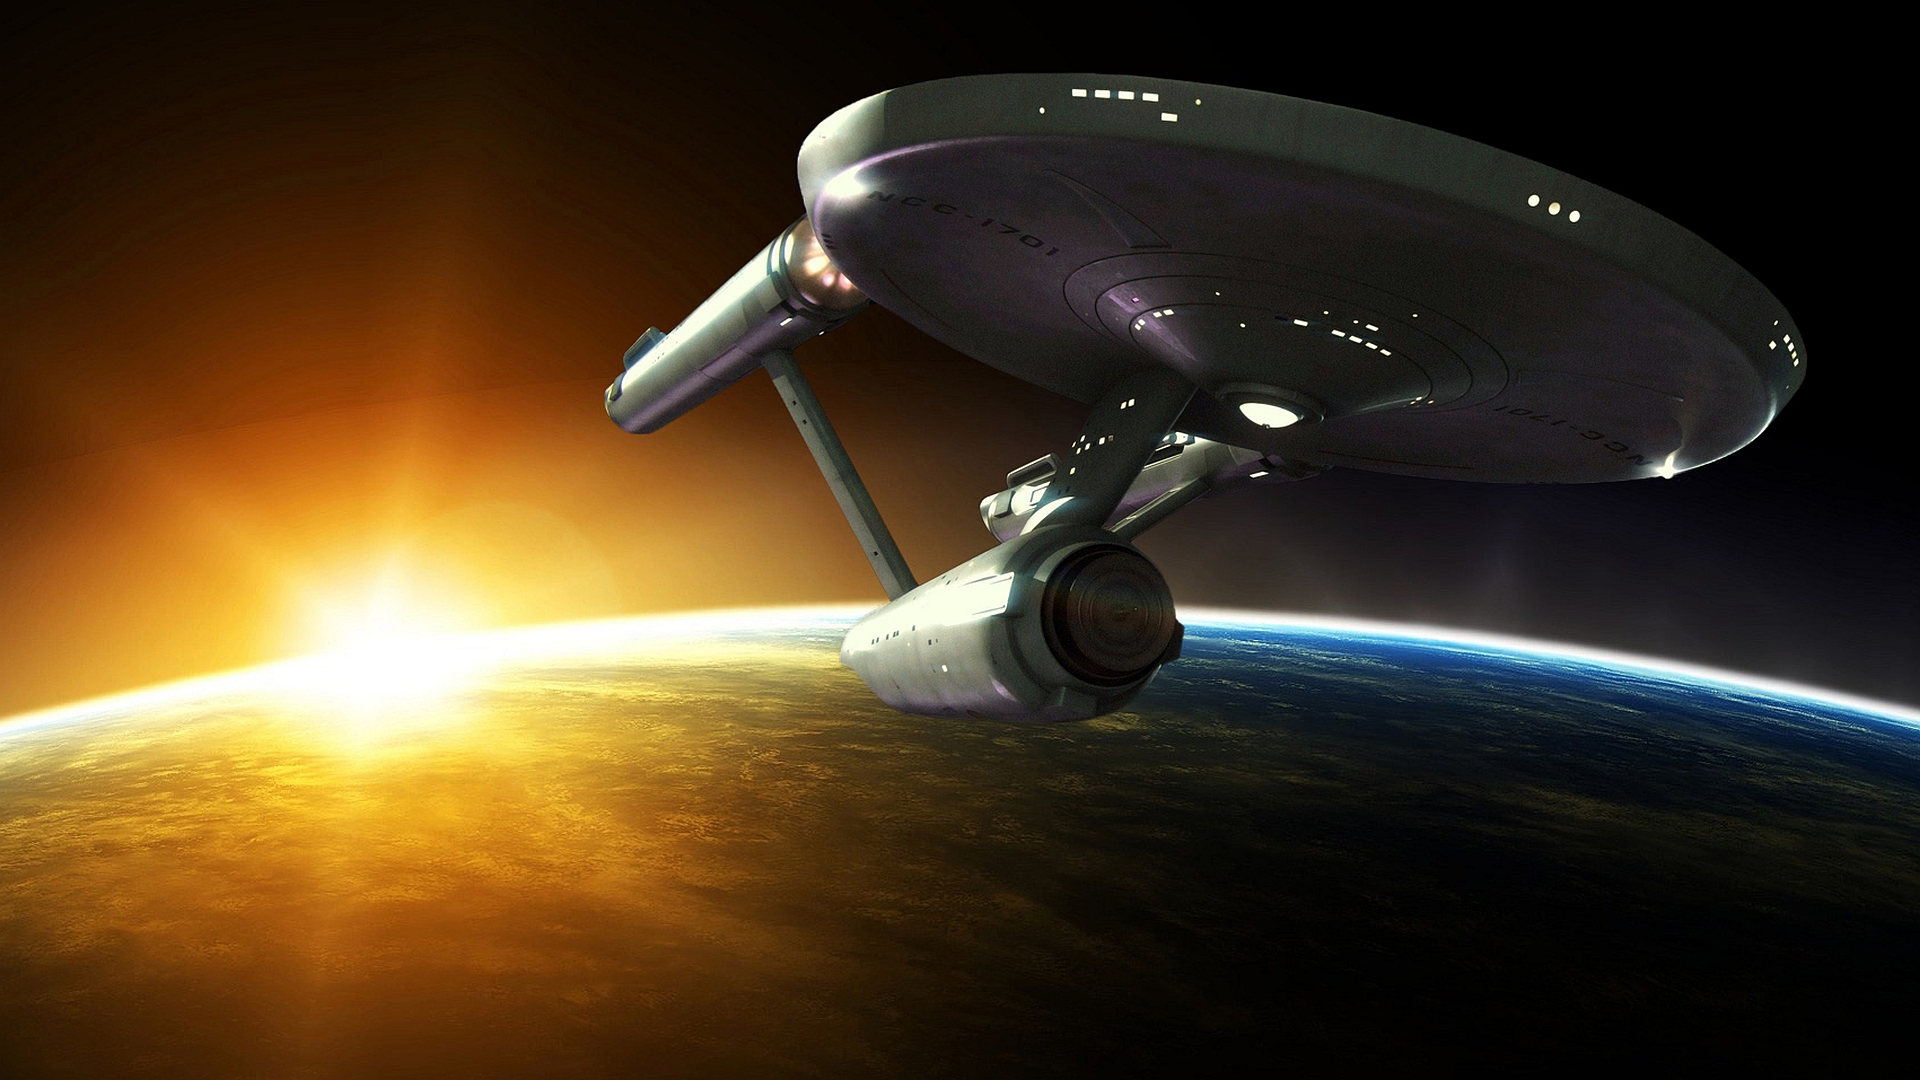 Star Trek: The Original Series Full HD Wallpaper and Background Image